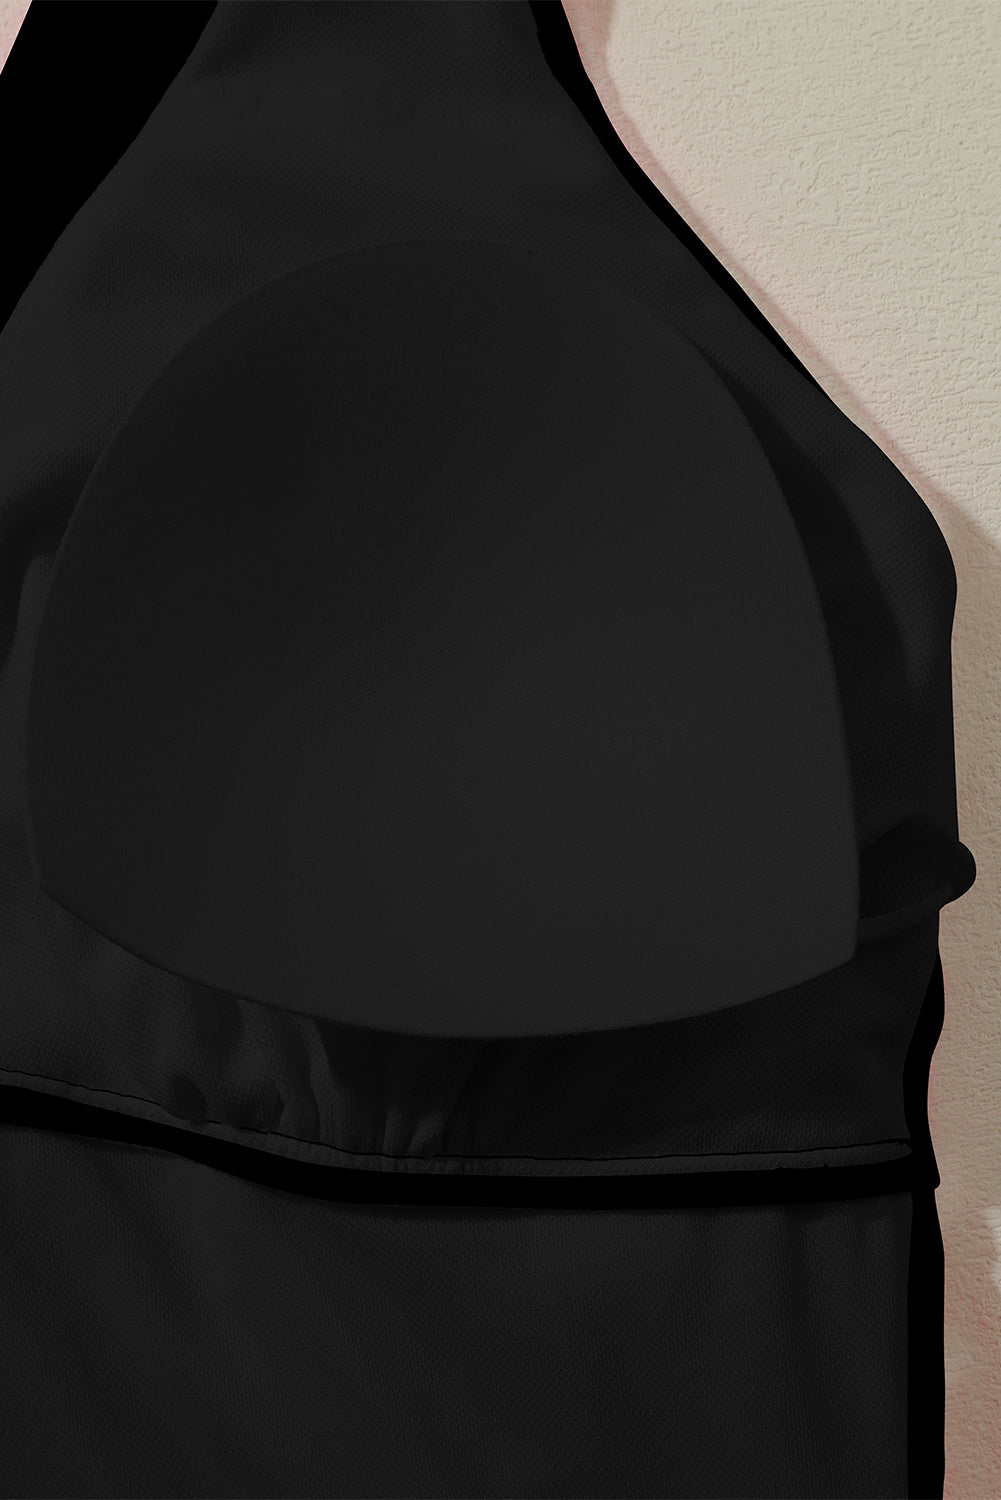 Crni monokini visokog kroja s dubokim V izrezom bez leđa i visokim izrezom